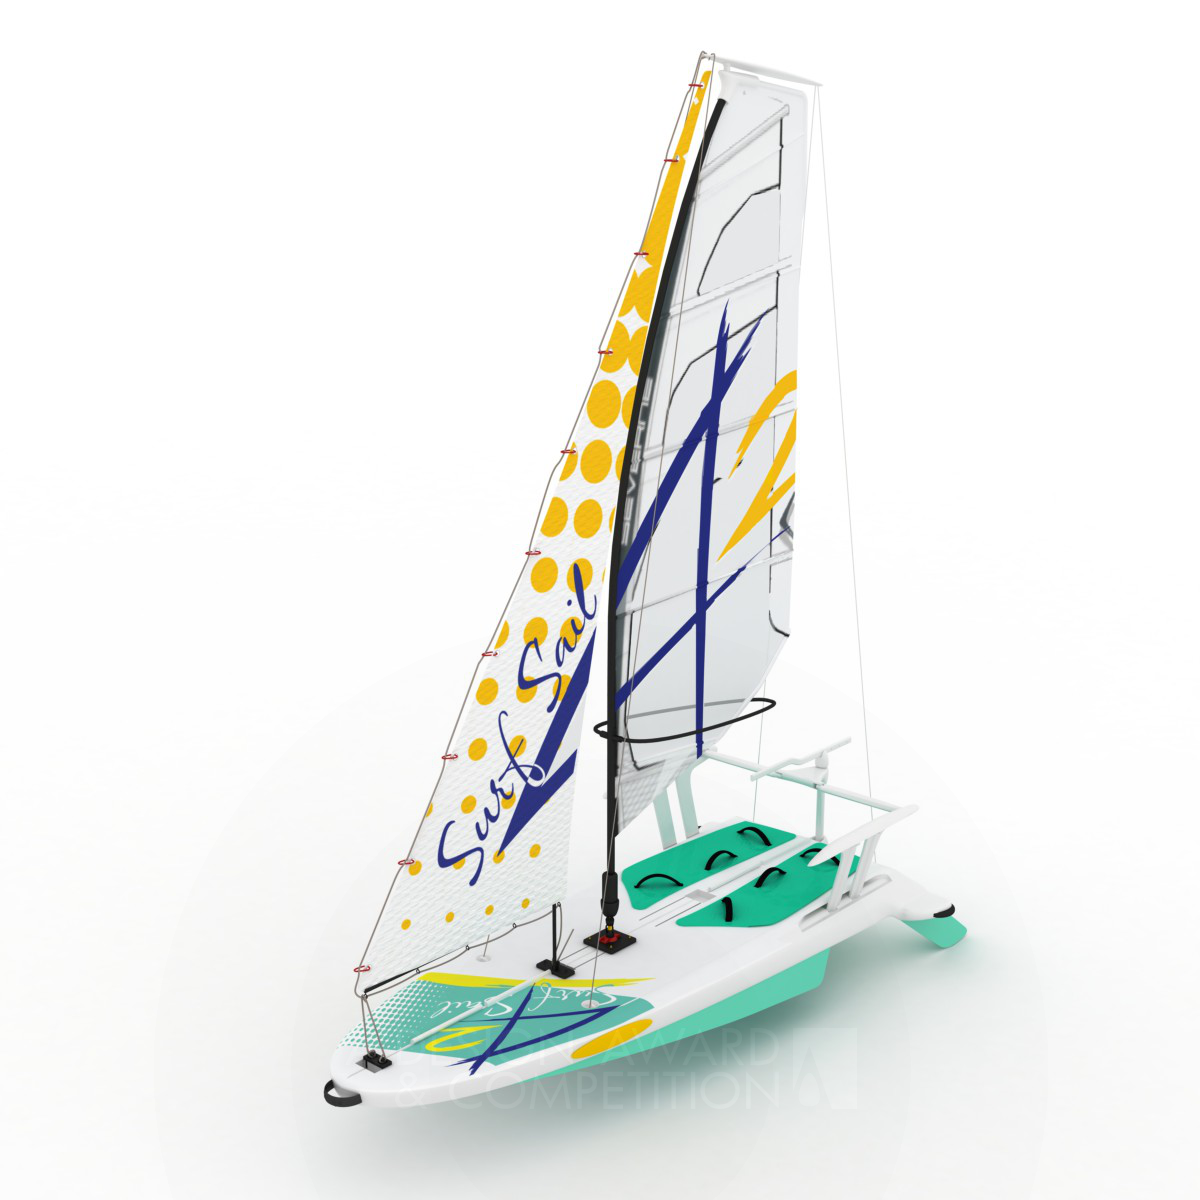 SurfSail42 Sailboard for windsurfing and sailing by Hakan Gürsu Bronze Yacht and Marine Vessels Design Award Winner 2012 